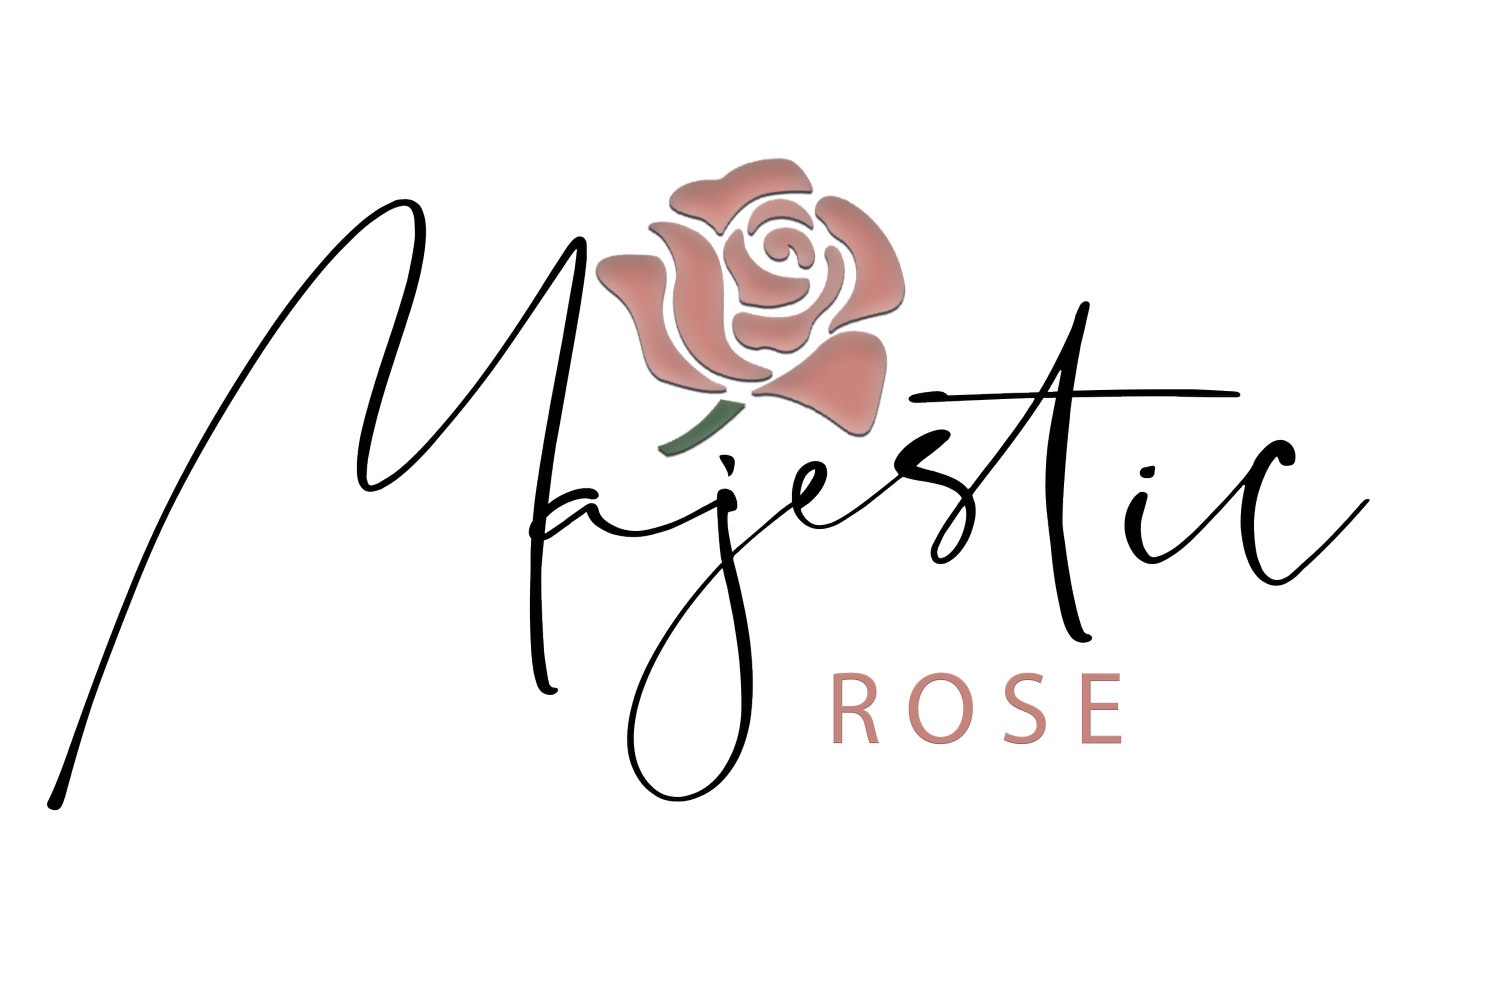 Majestic Rose Care Home